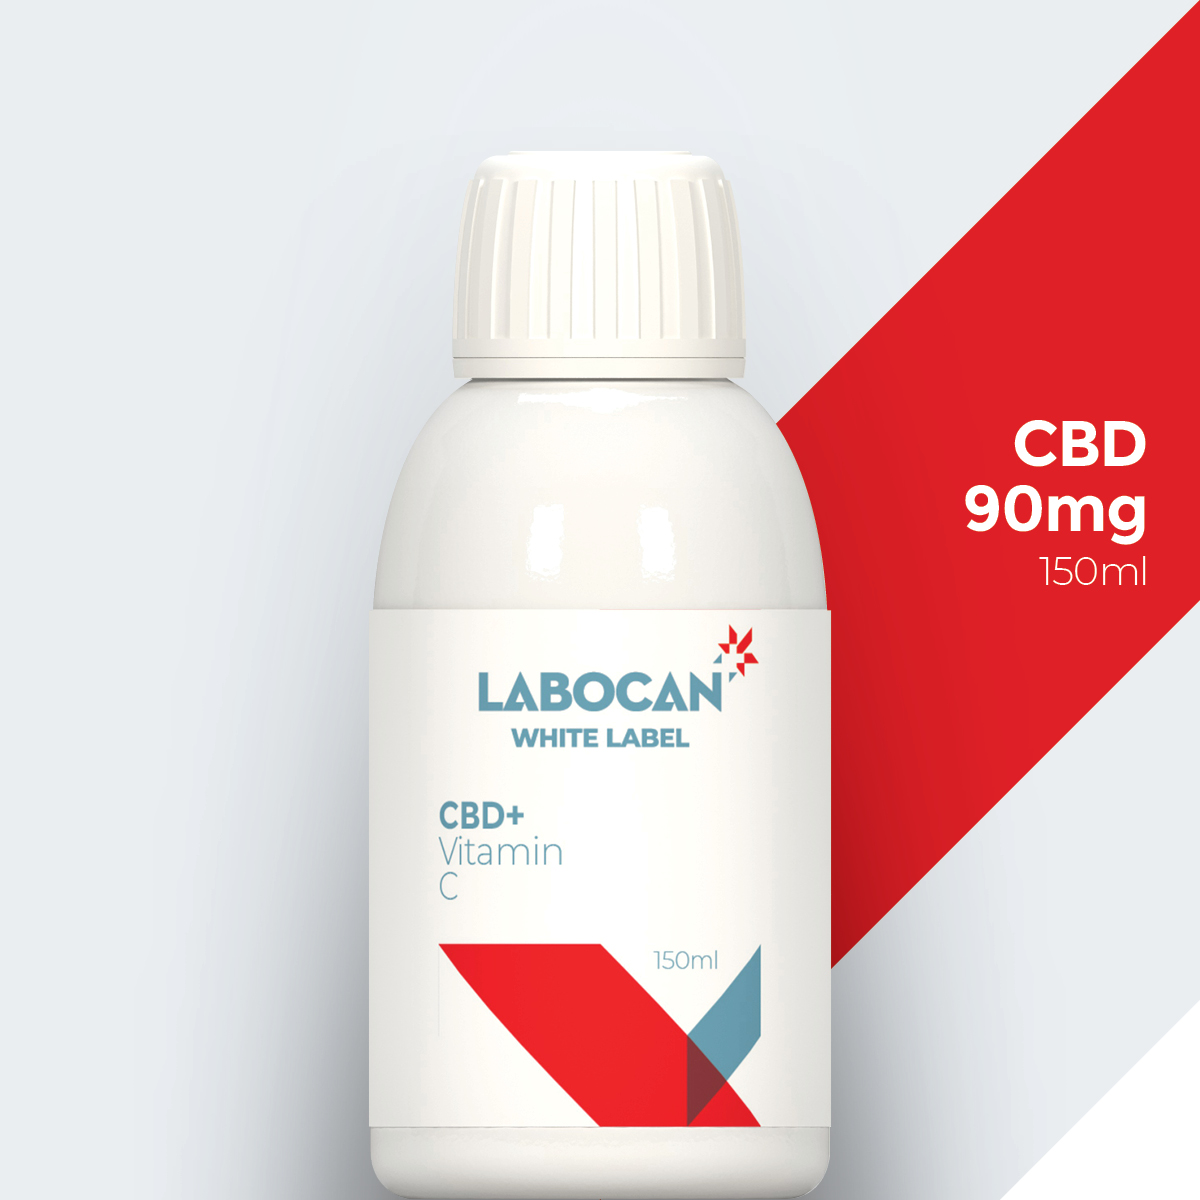 Labocan Cbd de marca blanca con vitamina C